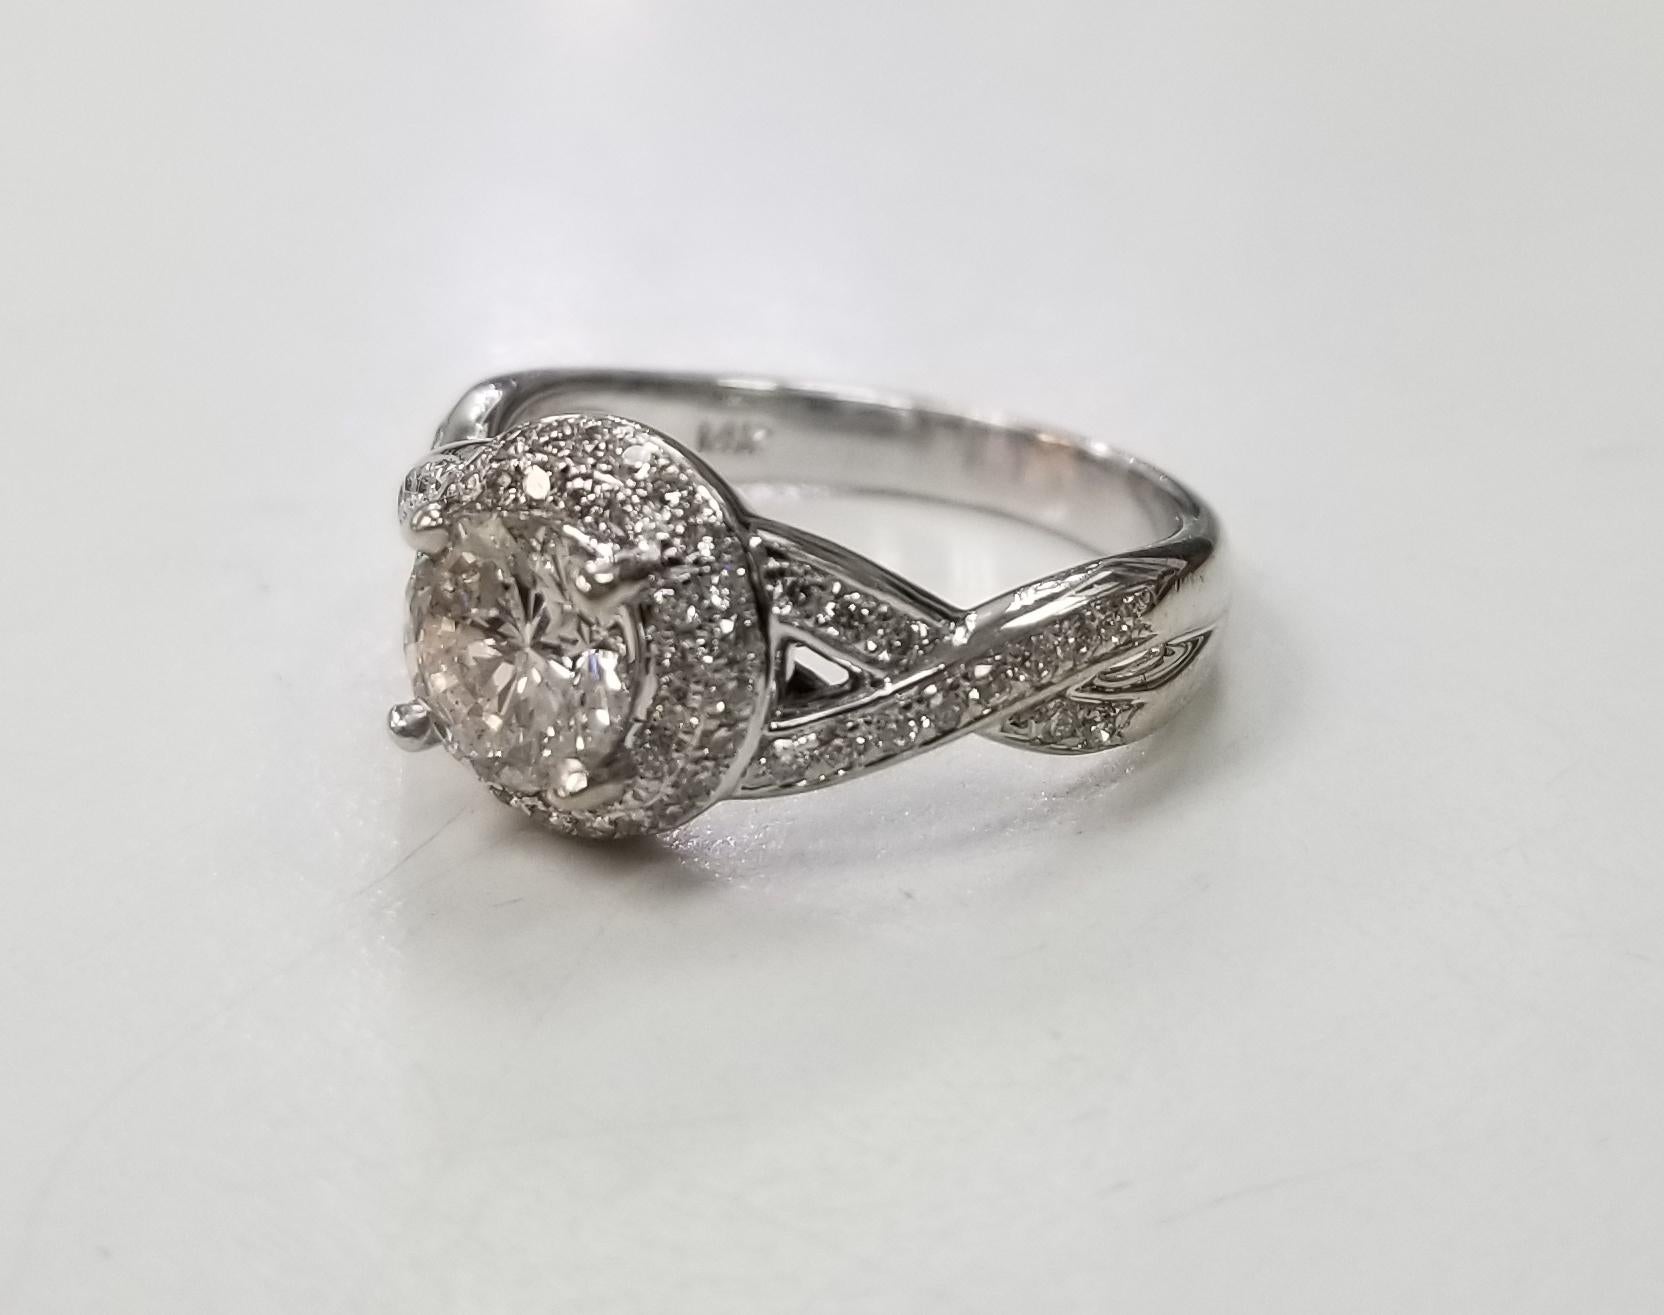 14k white gold double halo ring, containing 1 brilliant cut diamond; color